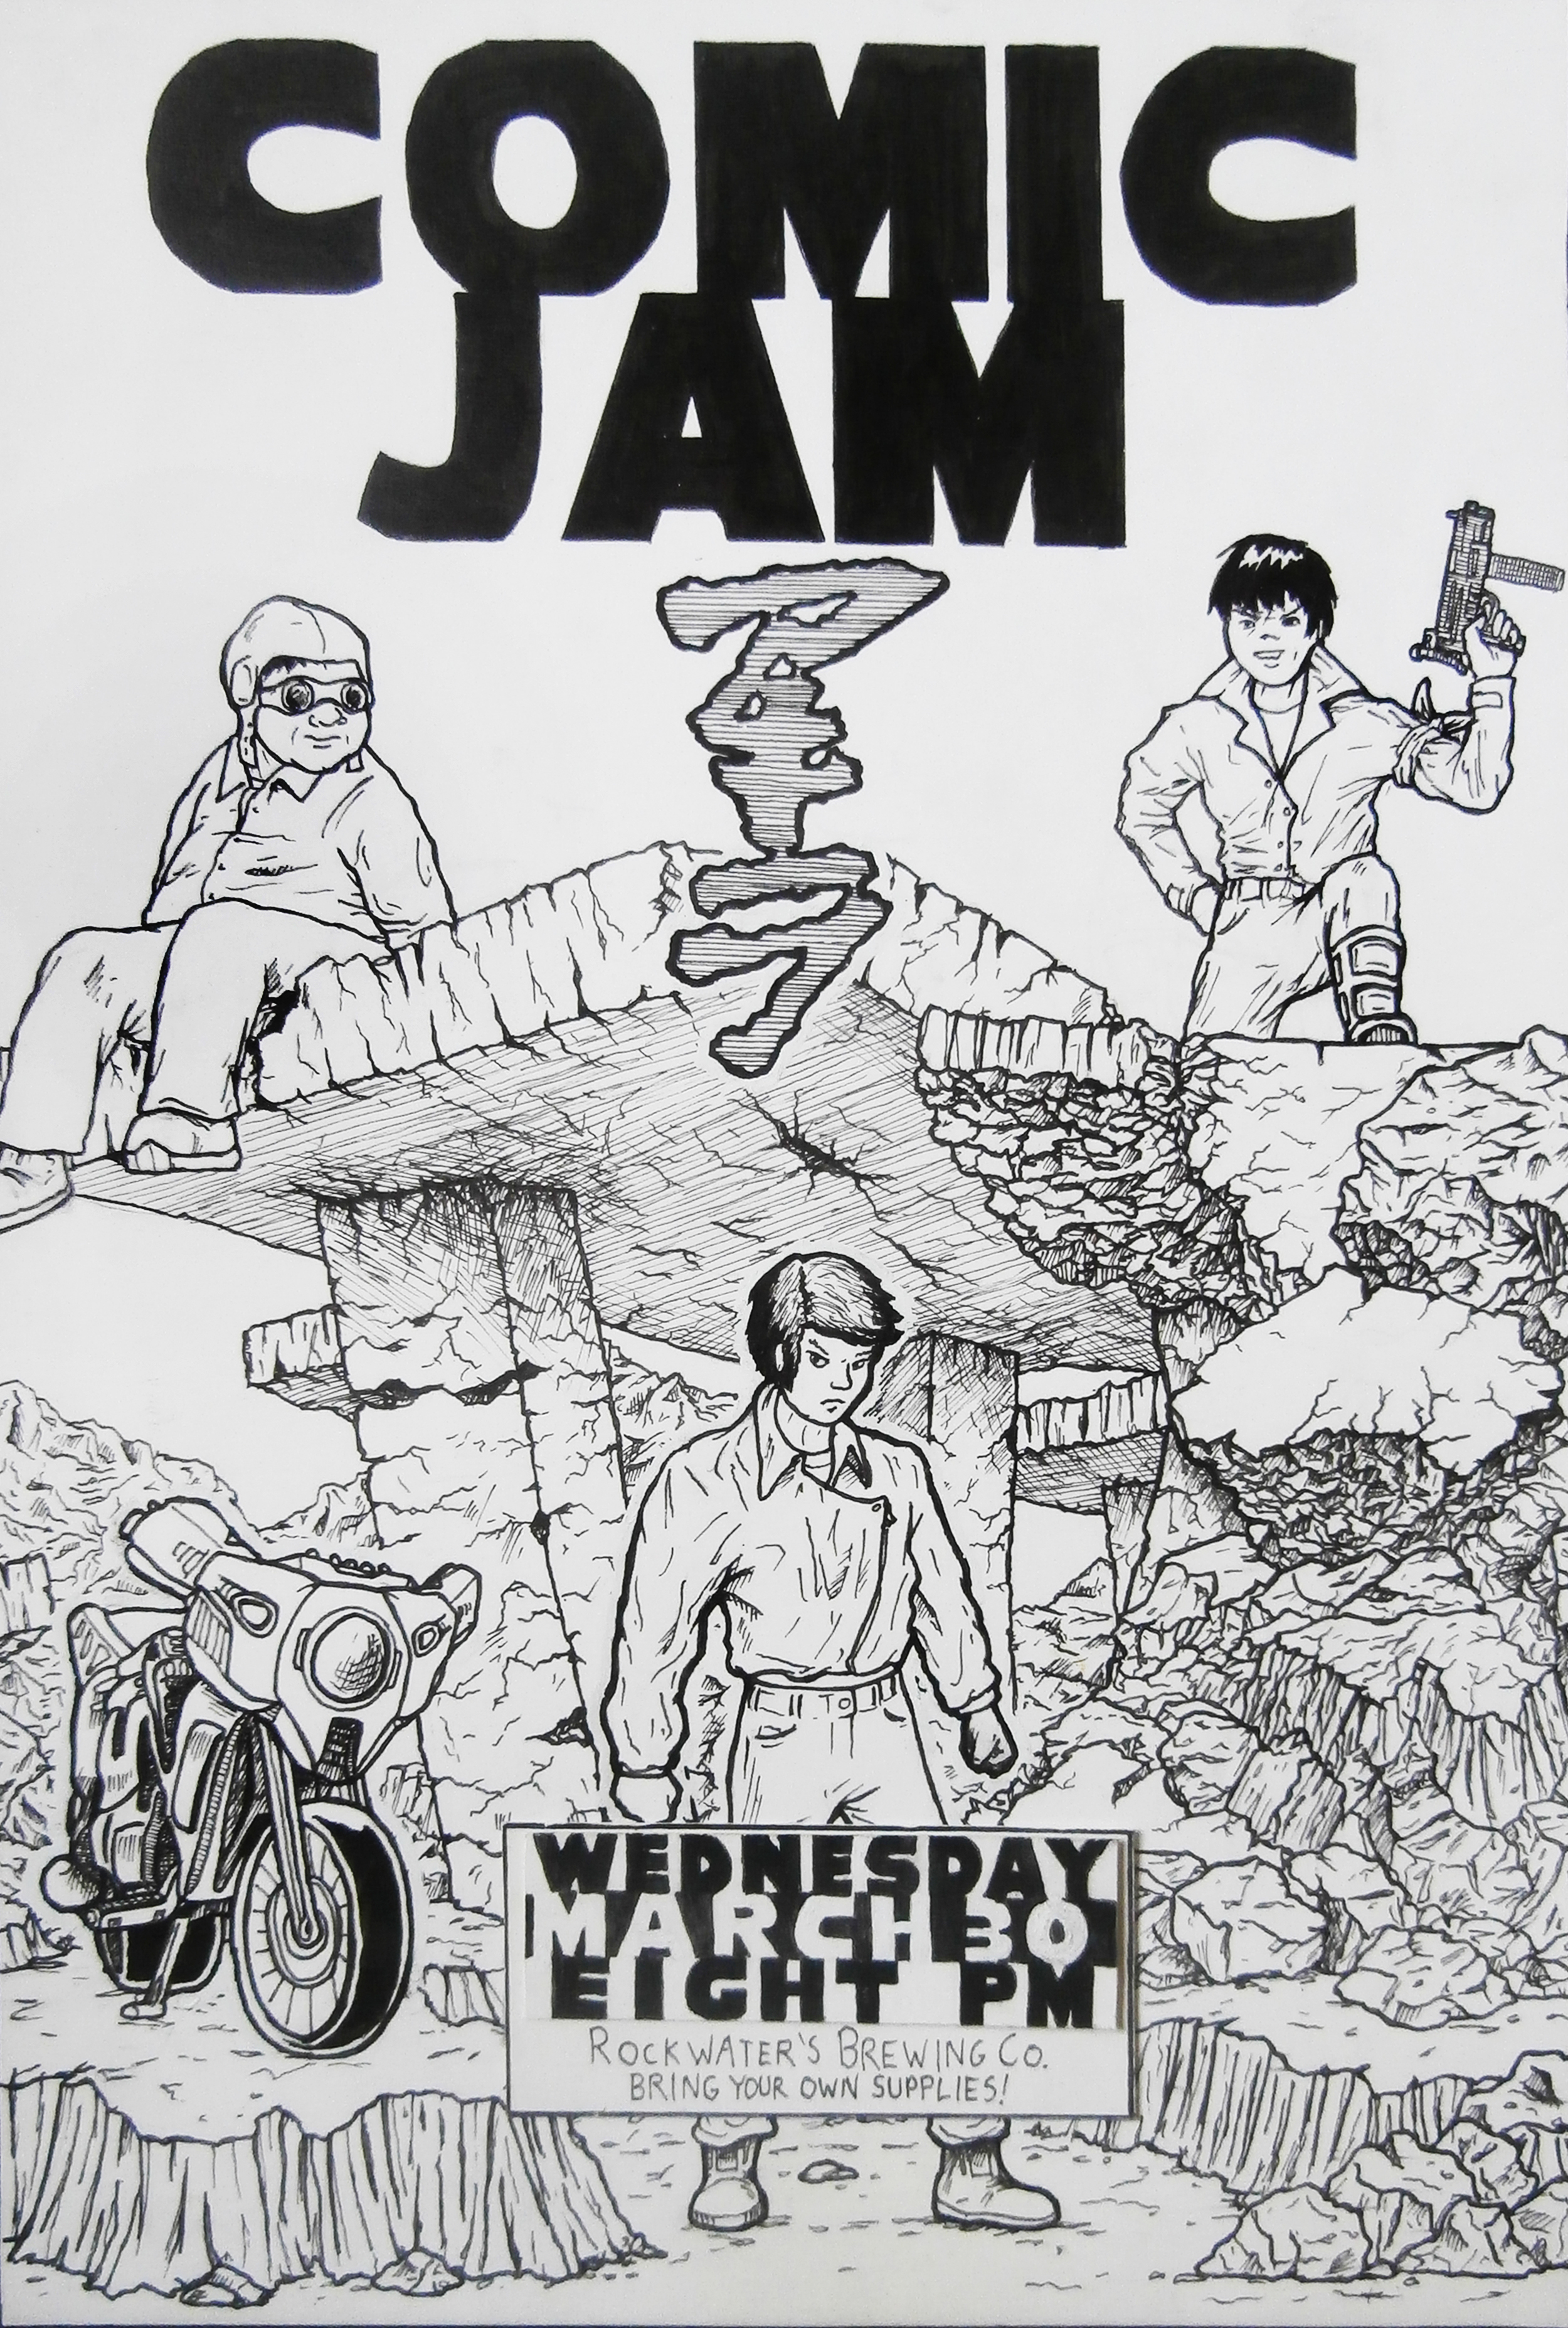 Comic Jam poster, 2004